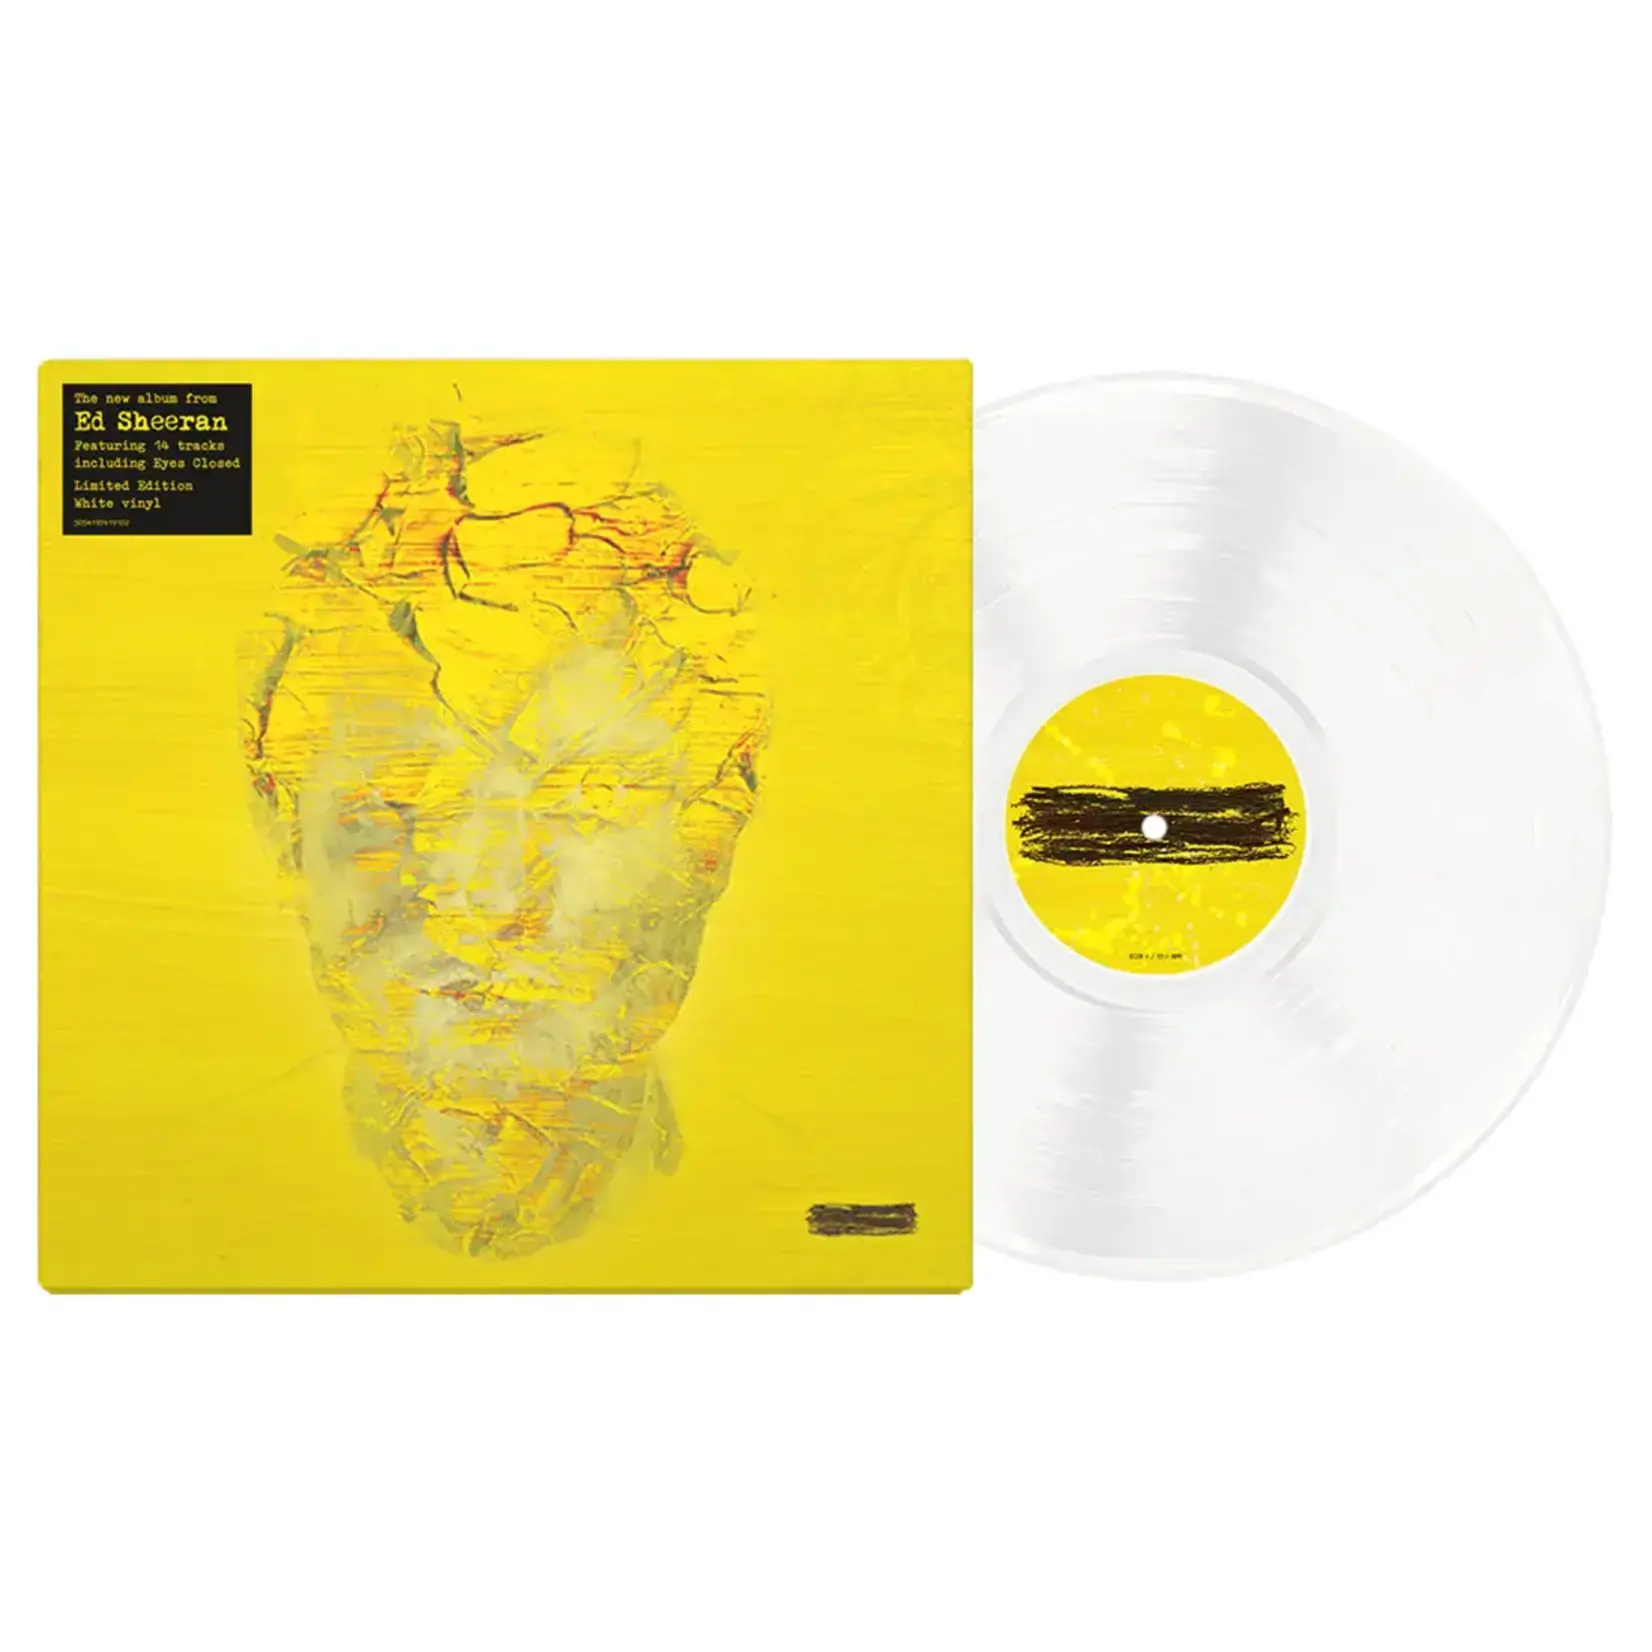 [New] Ed Sheeran - - Subtract (white vinyl, indie exclusive)